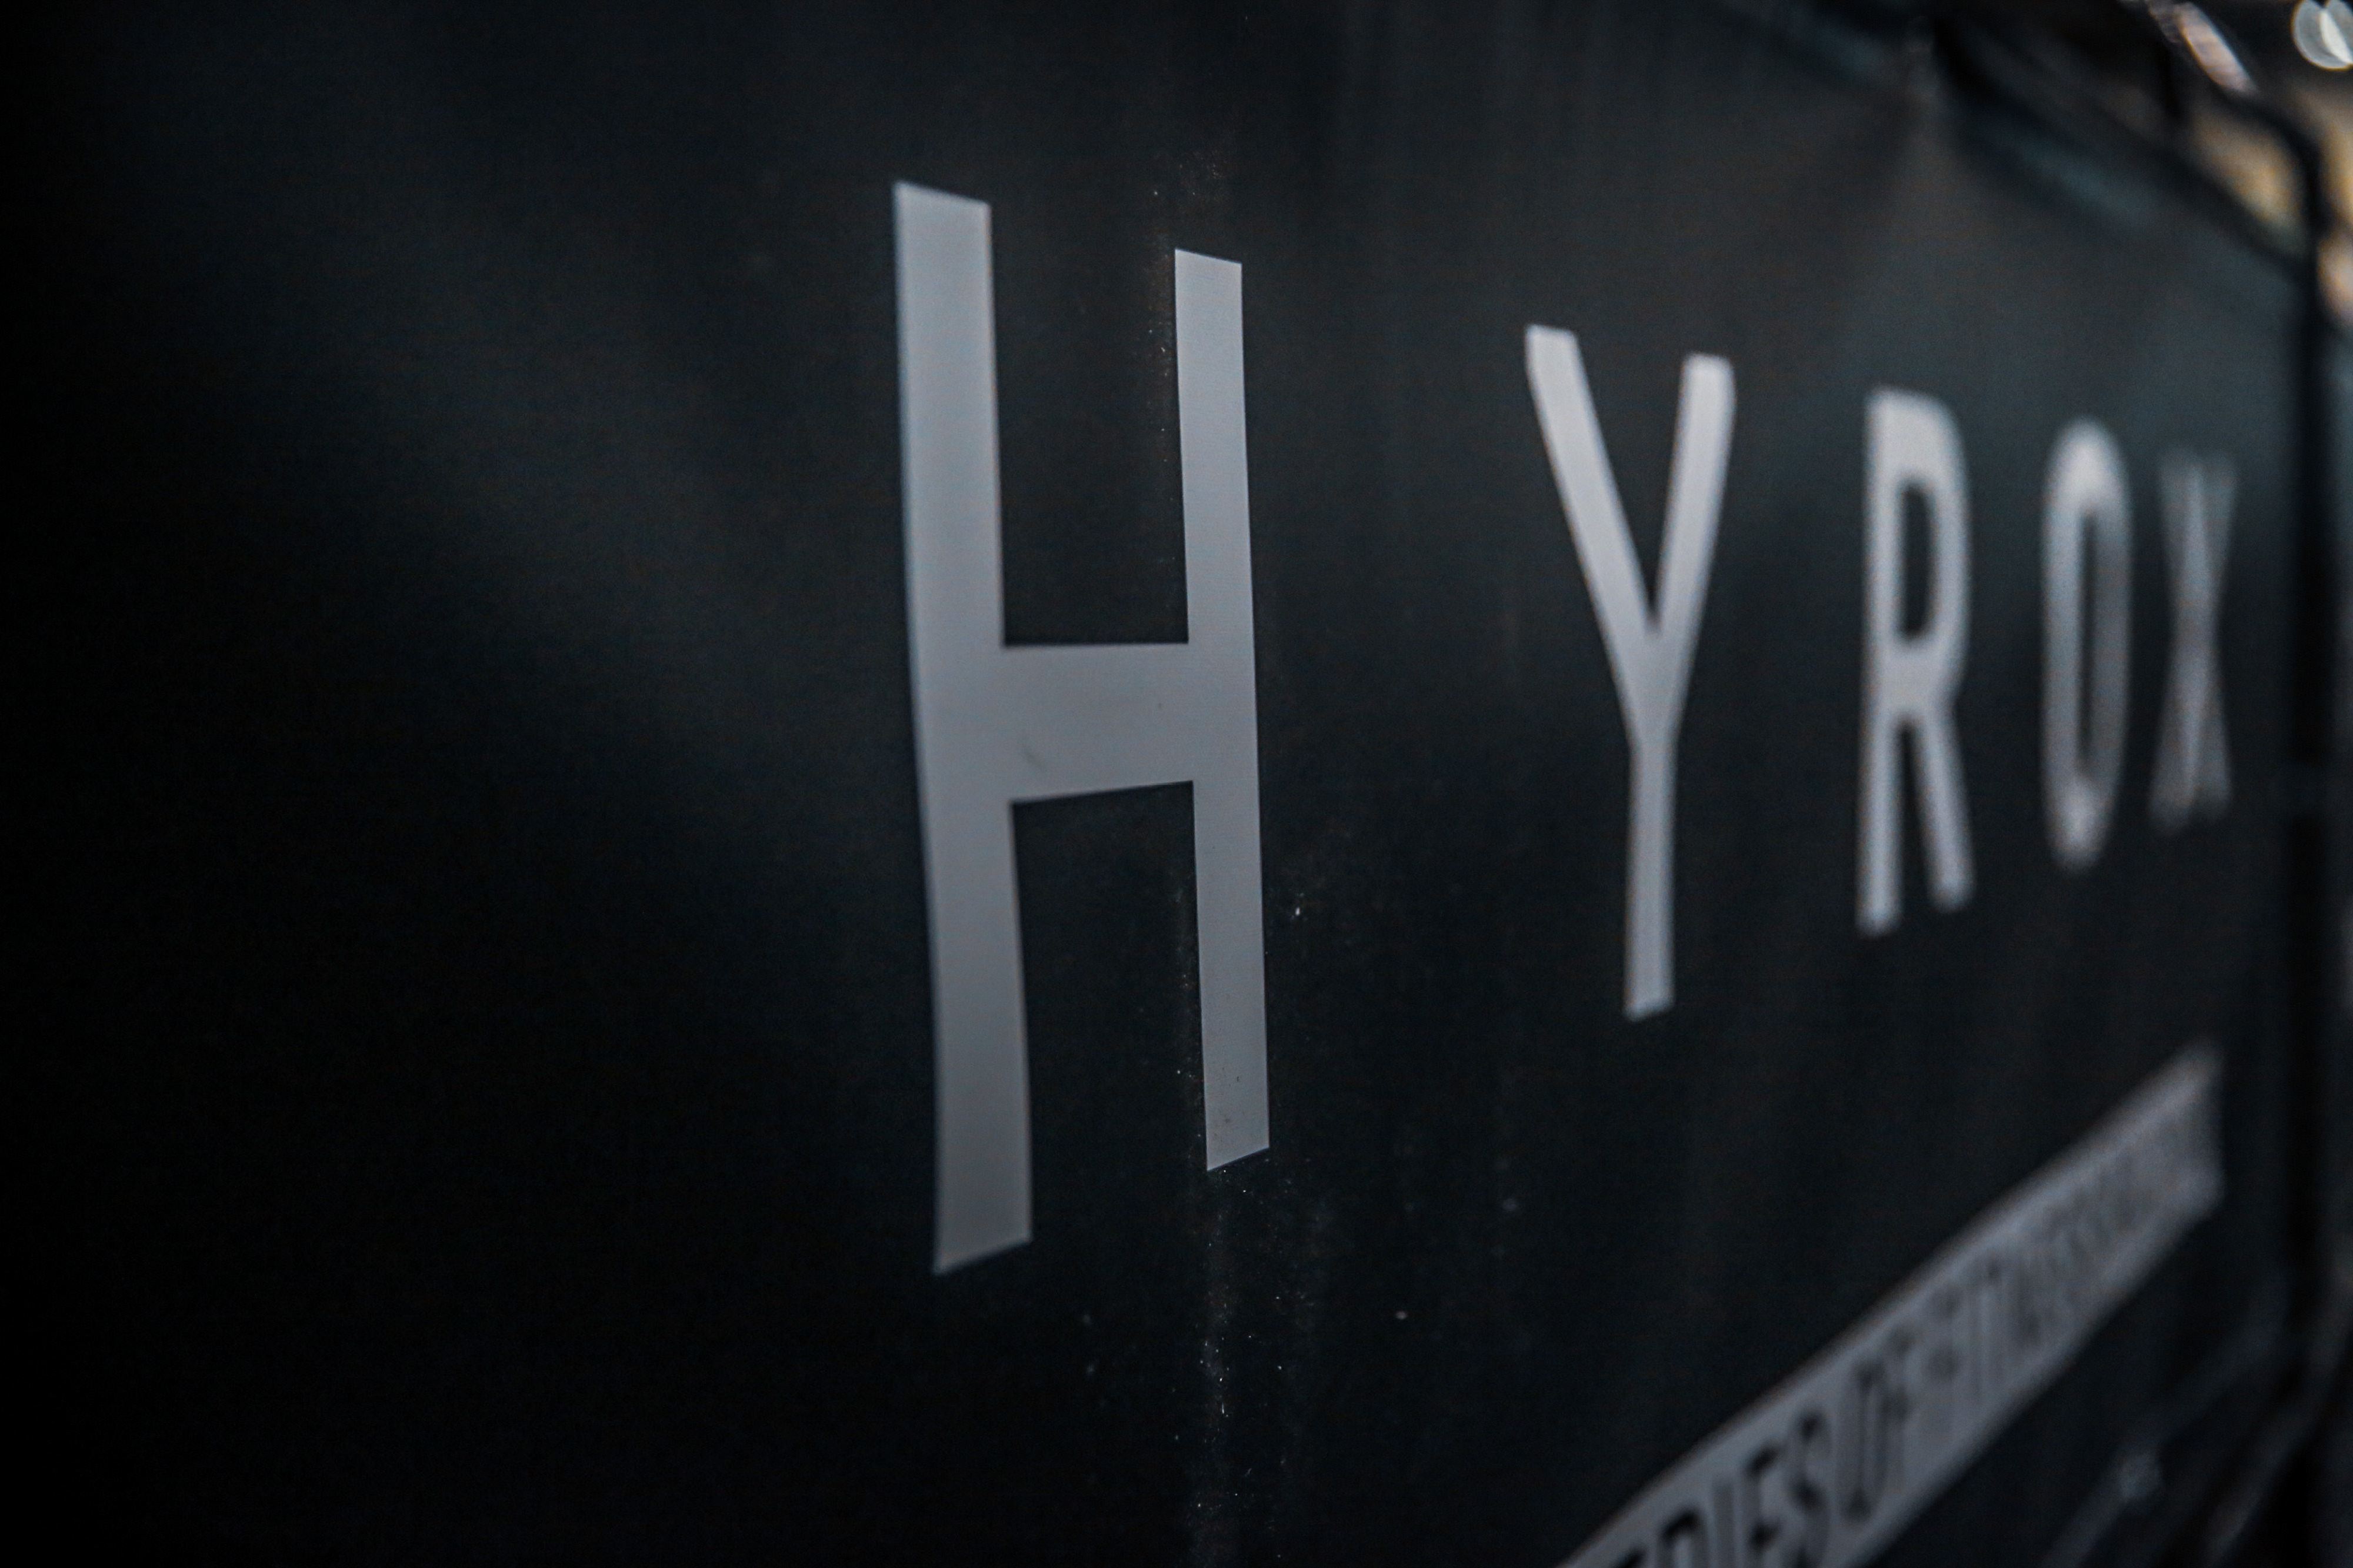 How Hard is Hyrox?